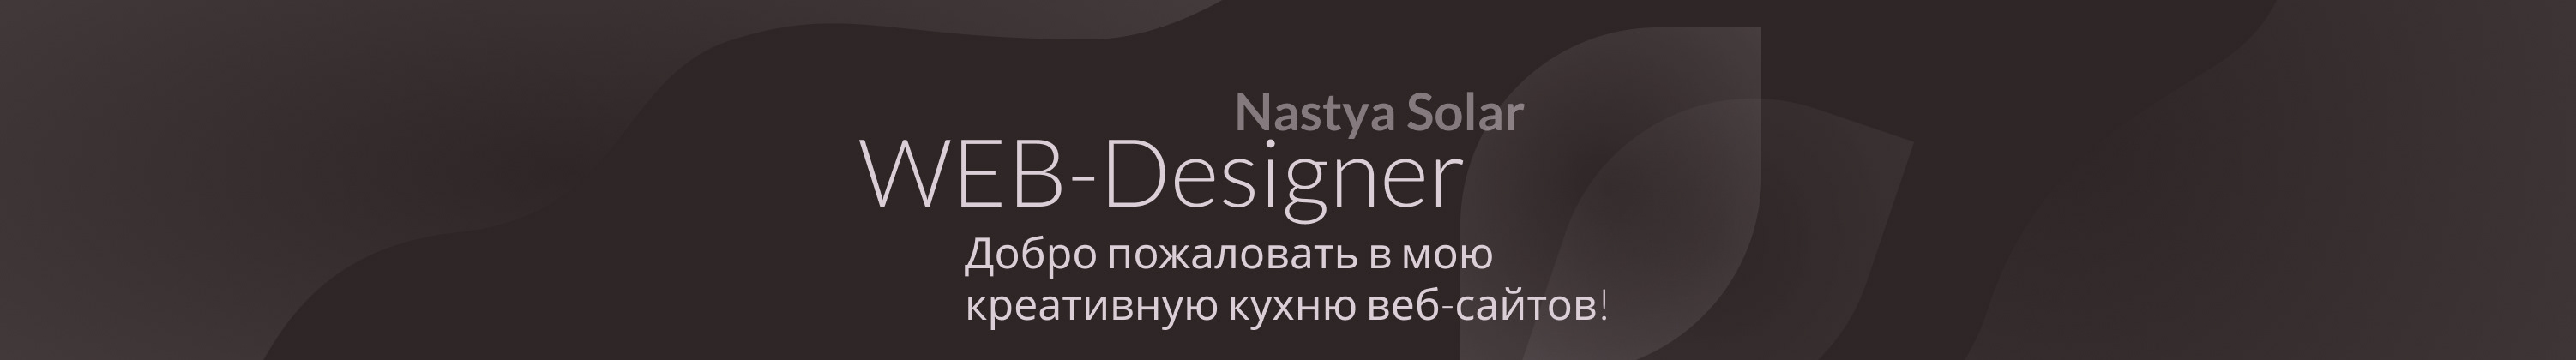 Nastya Solar's profile banner